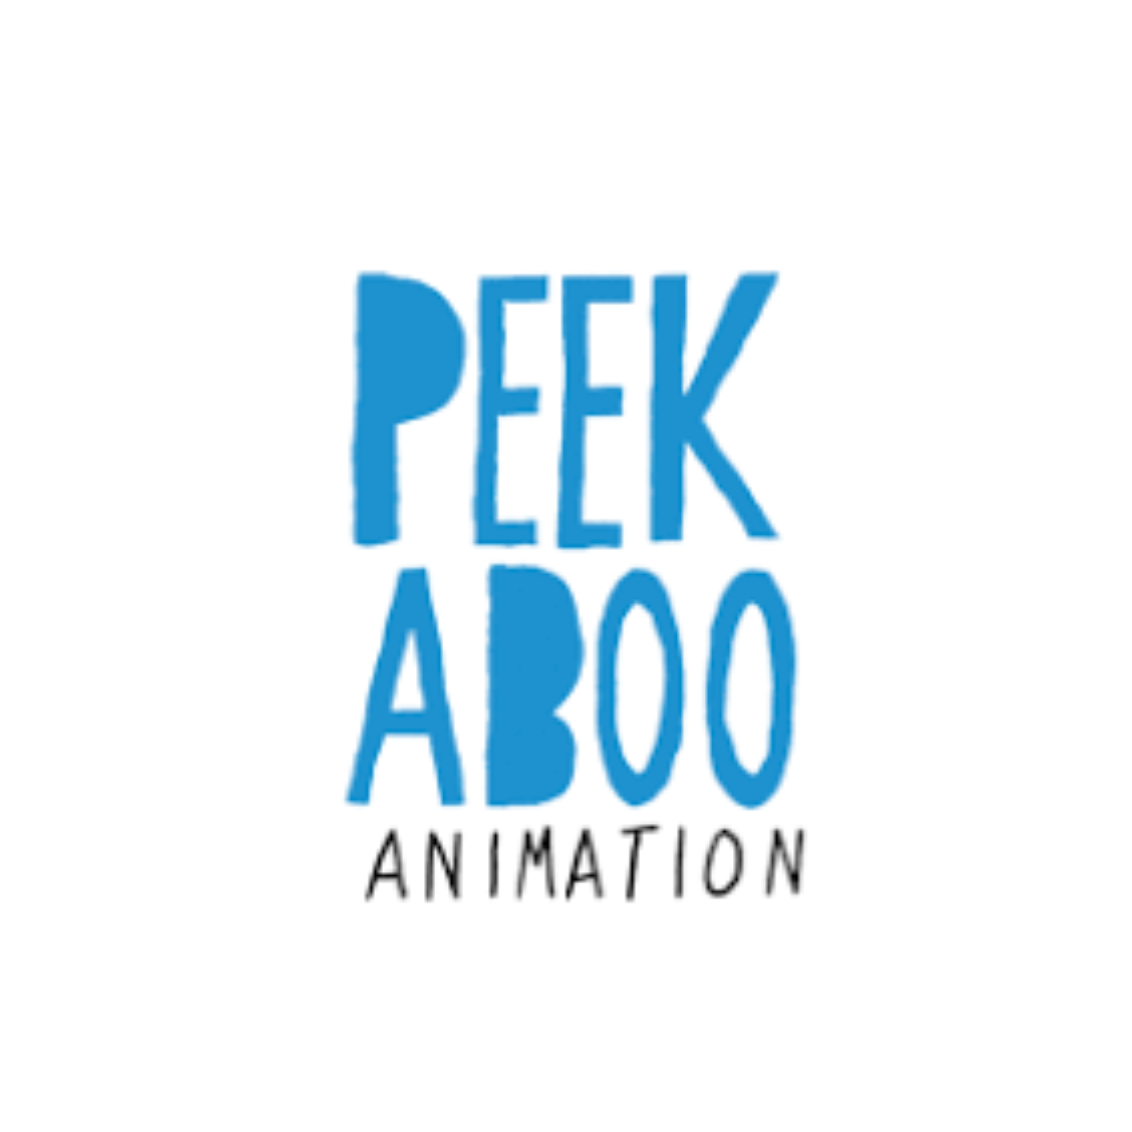 Peekaboo Animation